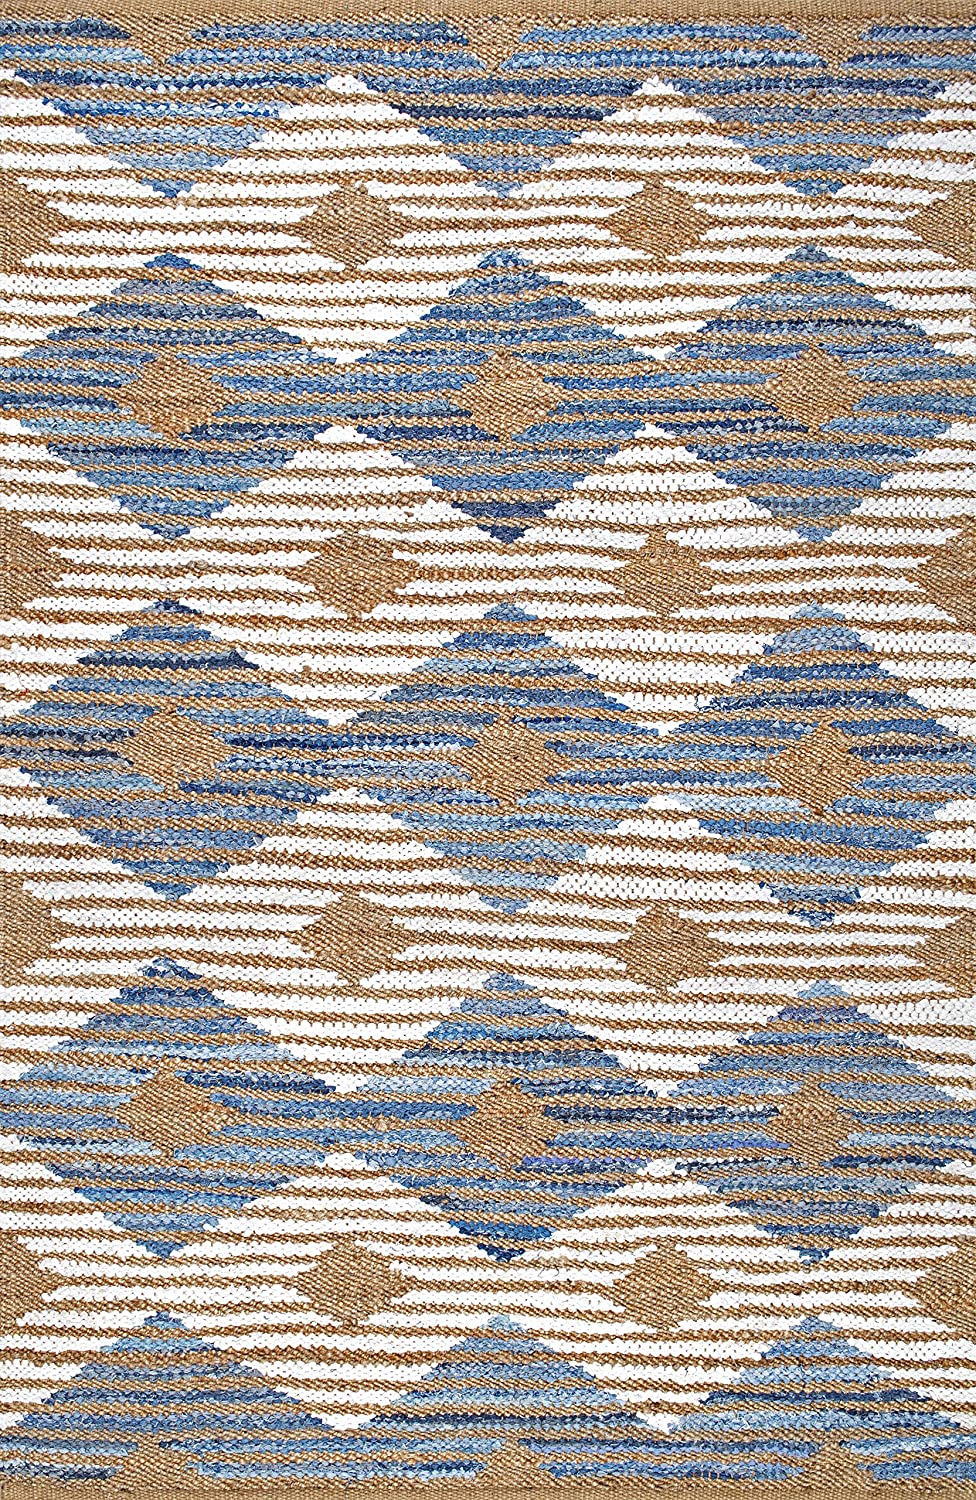 Buy rugs online @The Rug Republic - hand woven hemp denim area rug